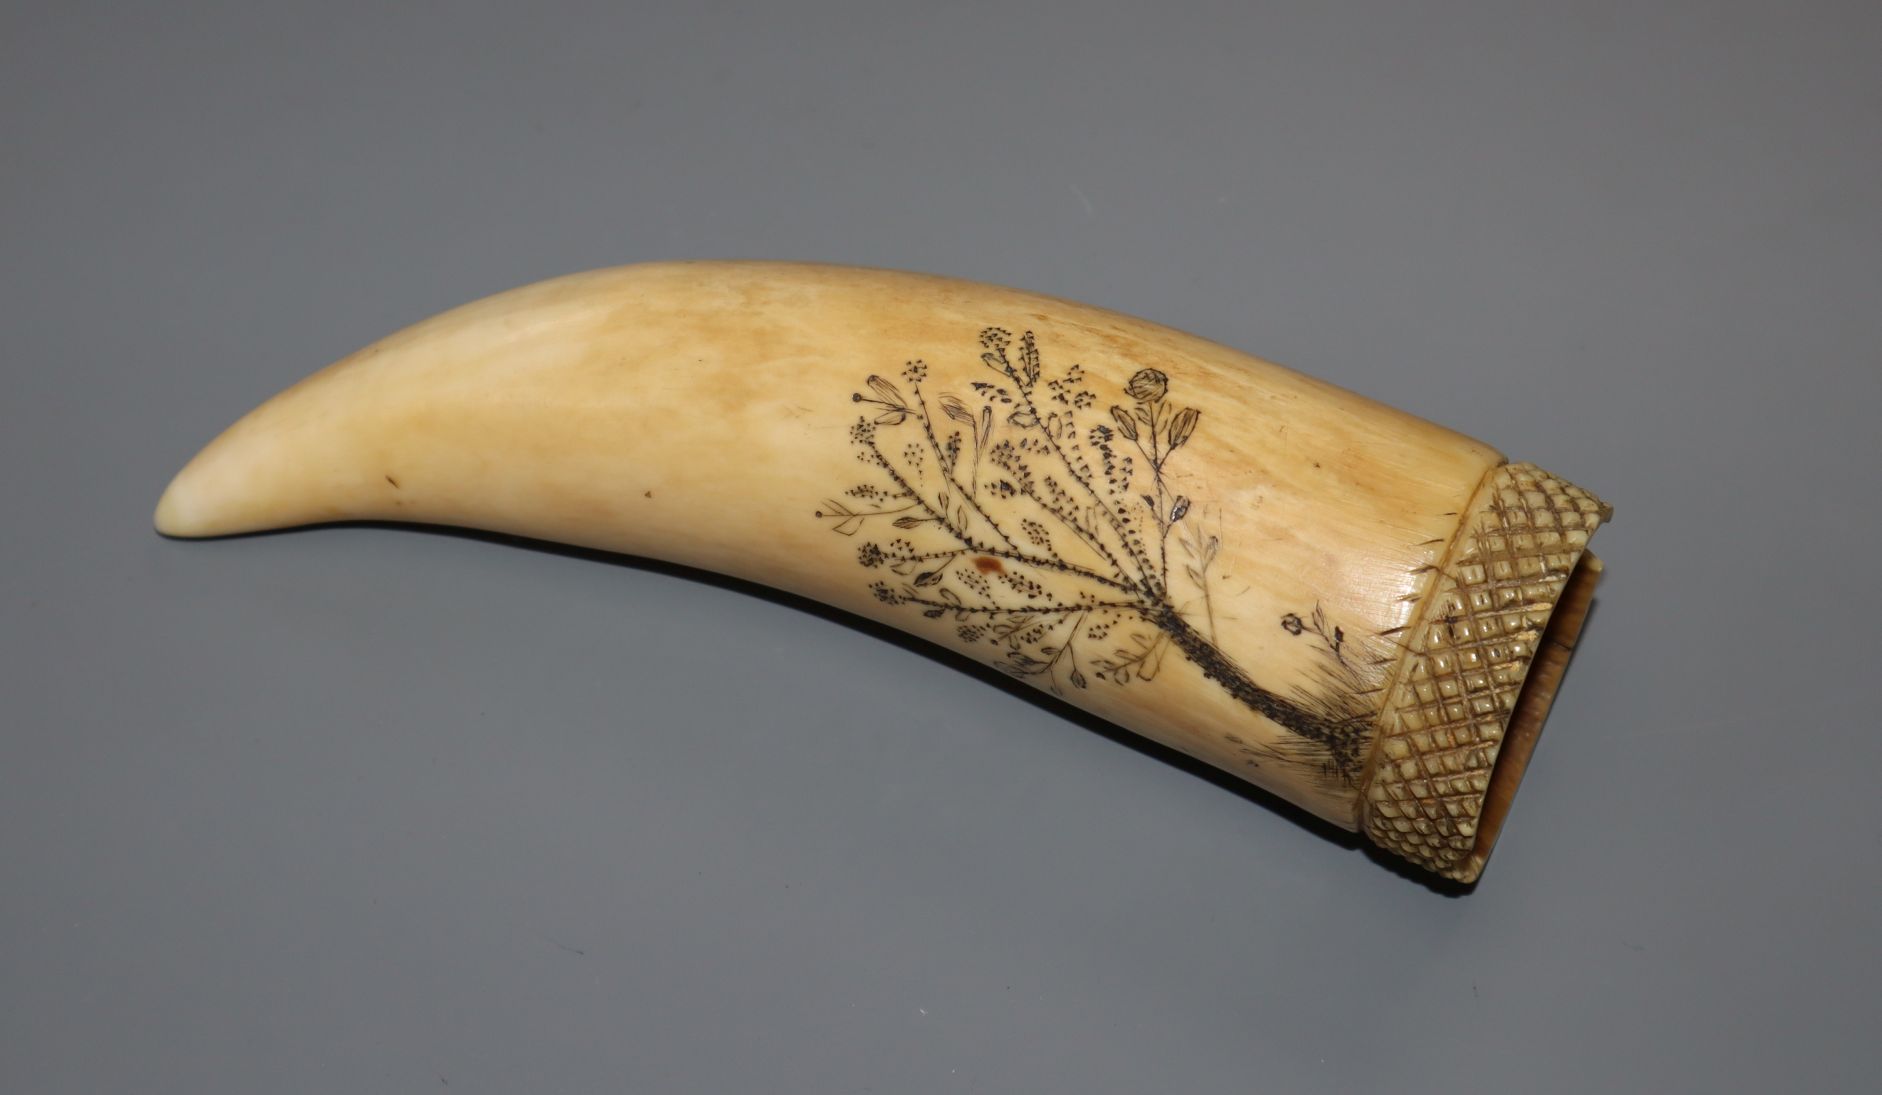 A 19th century scrimshaw sperm whale tooth, 13.5cm